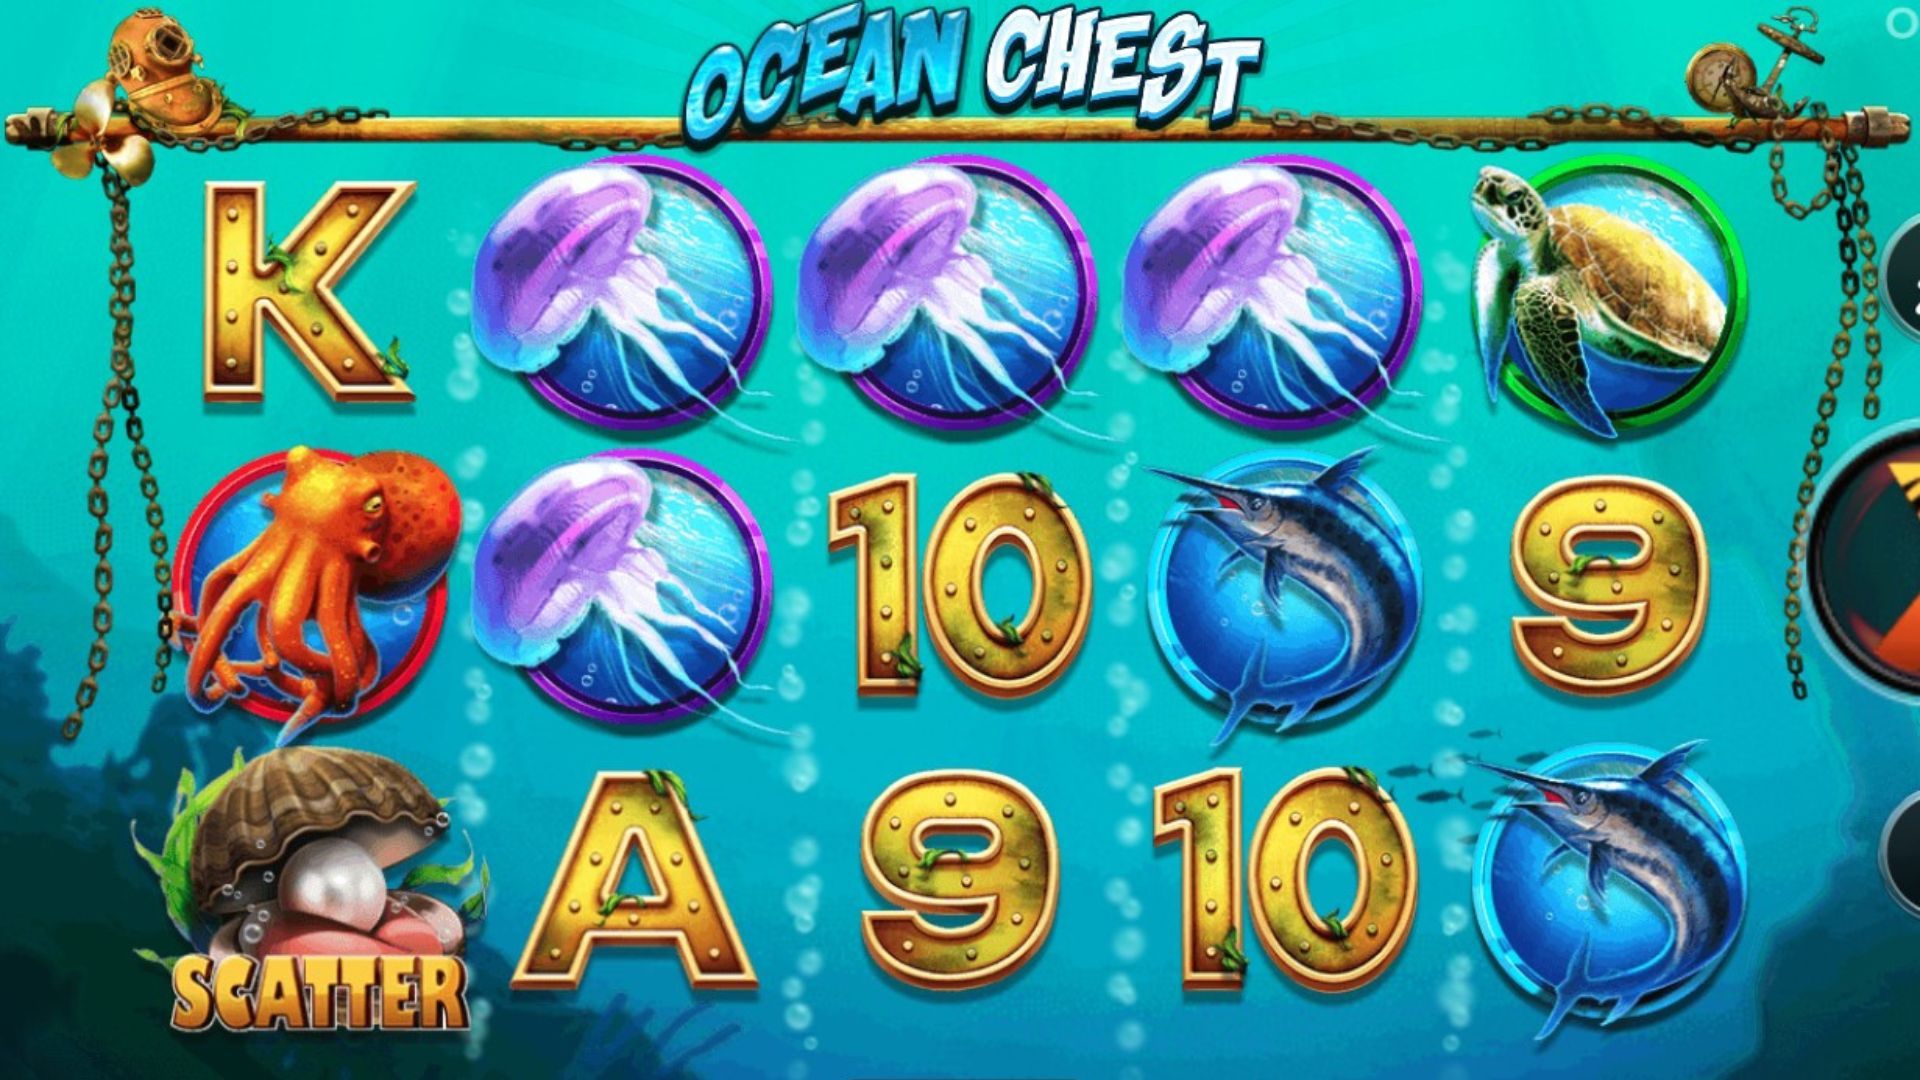 gameplay slot ocean chest